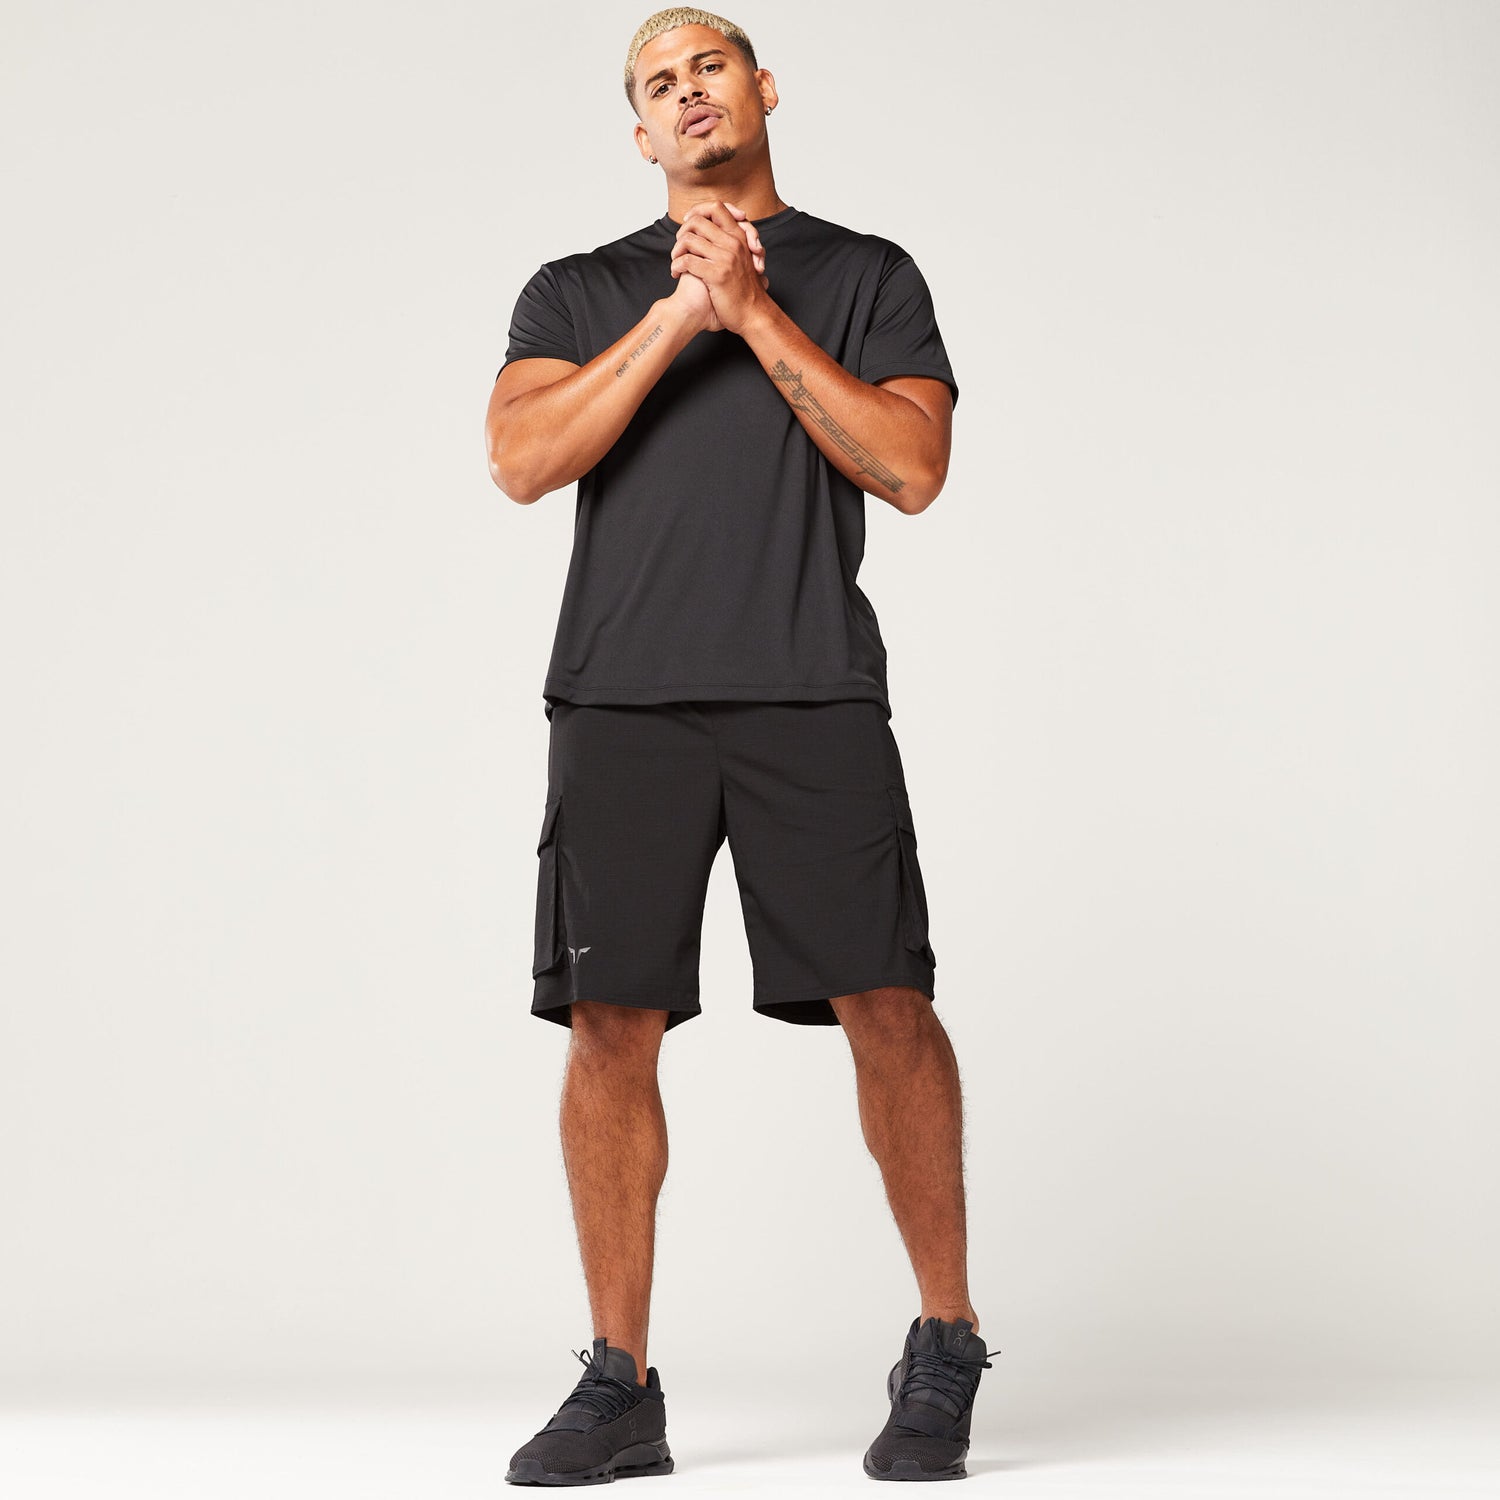 squatwolf-gym-wear-code-urban-tee-black-workout-shirts-for-men